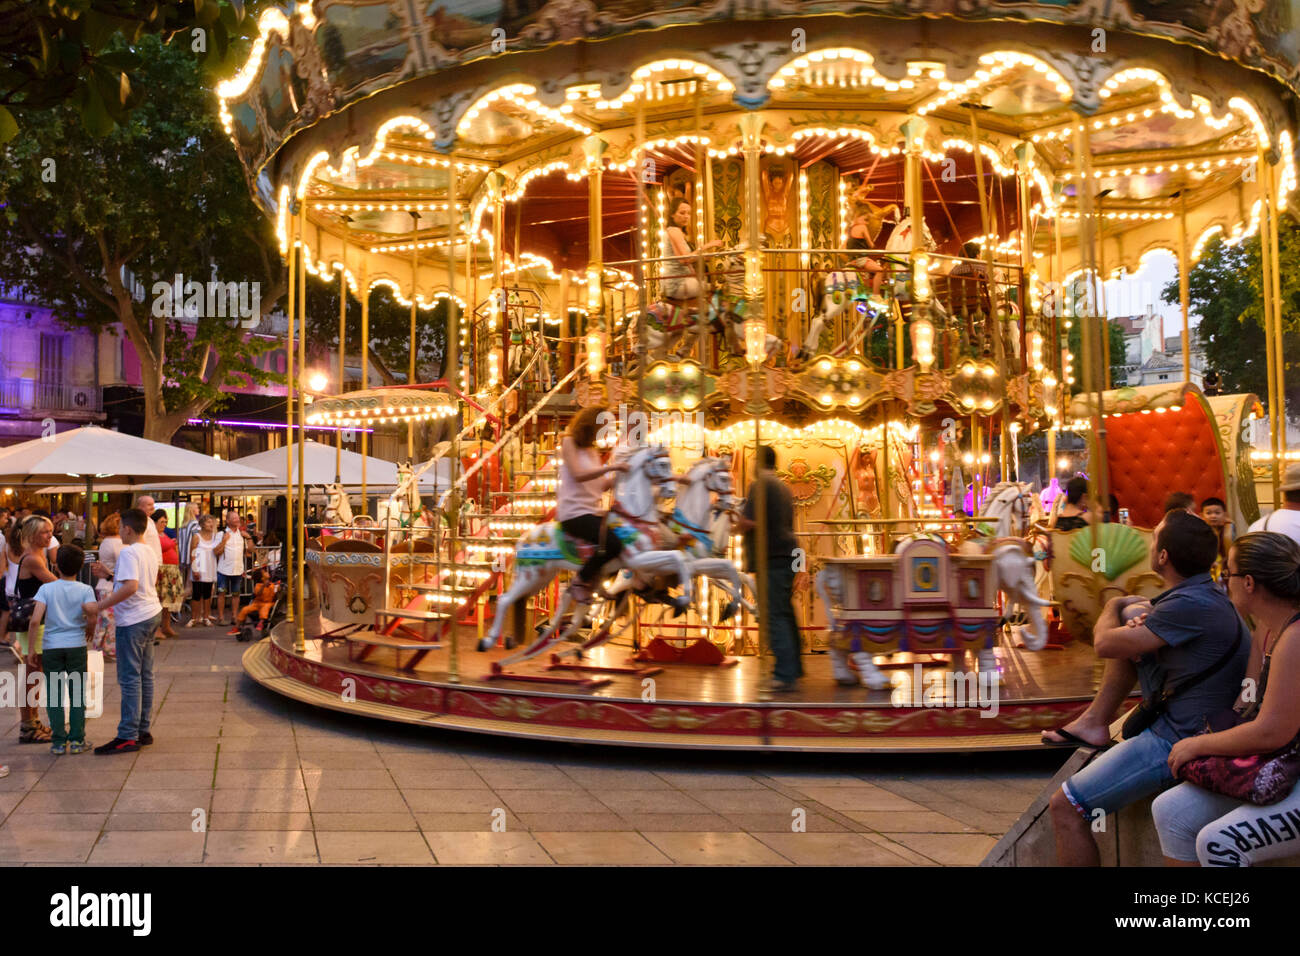 Carousel, Avignon, Provence, France Stock Photo